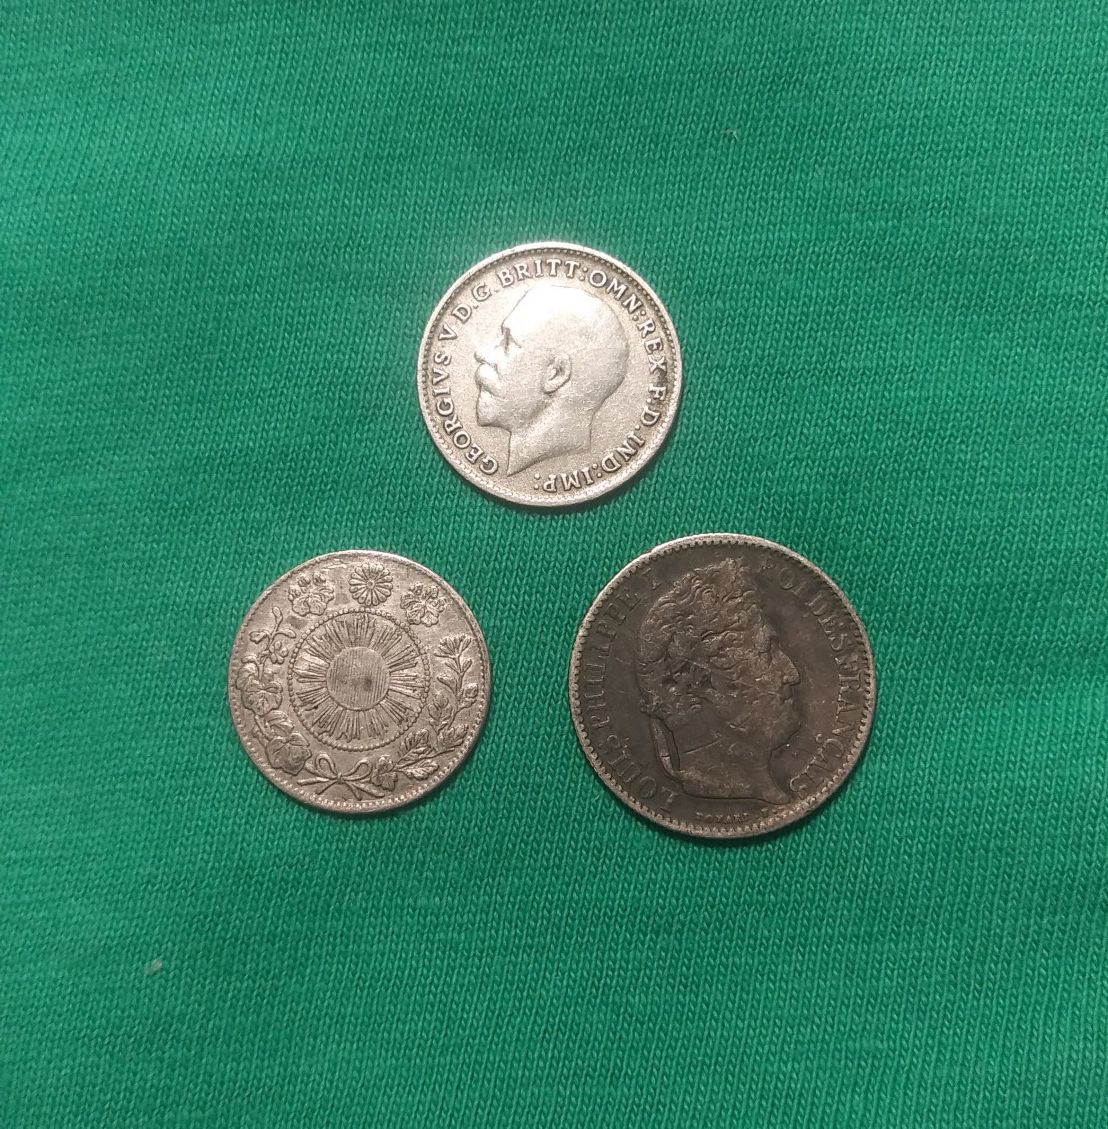 3 silver coins - sale pending